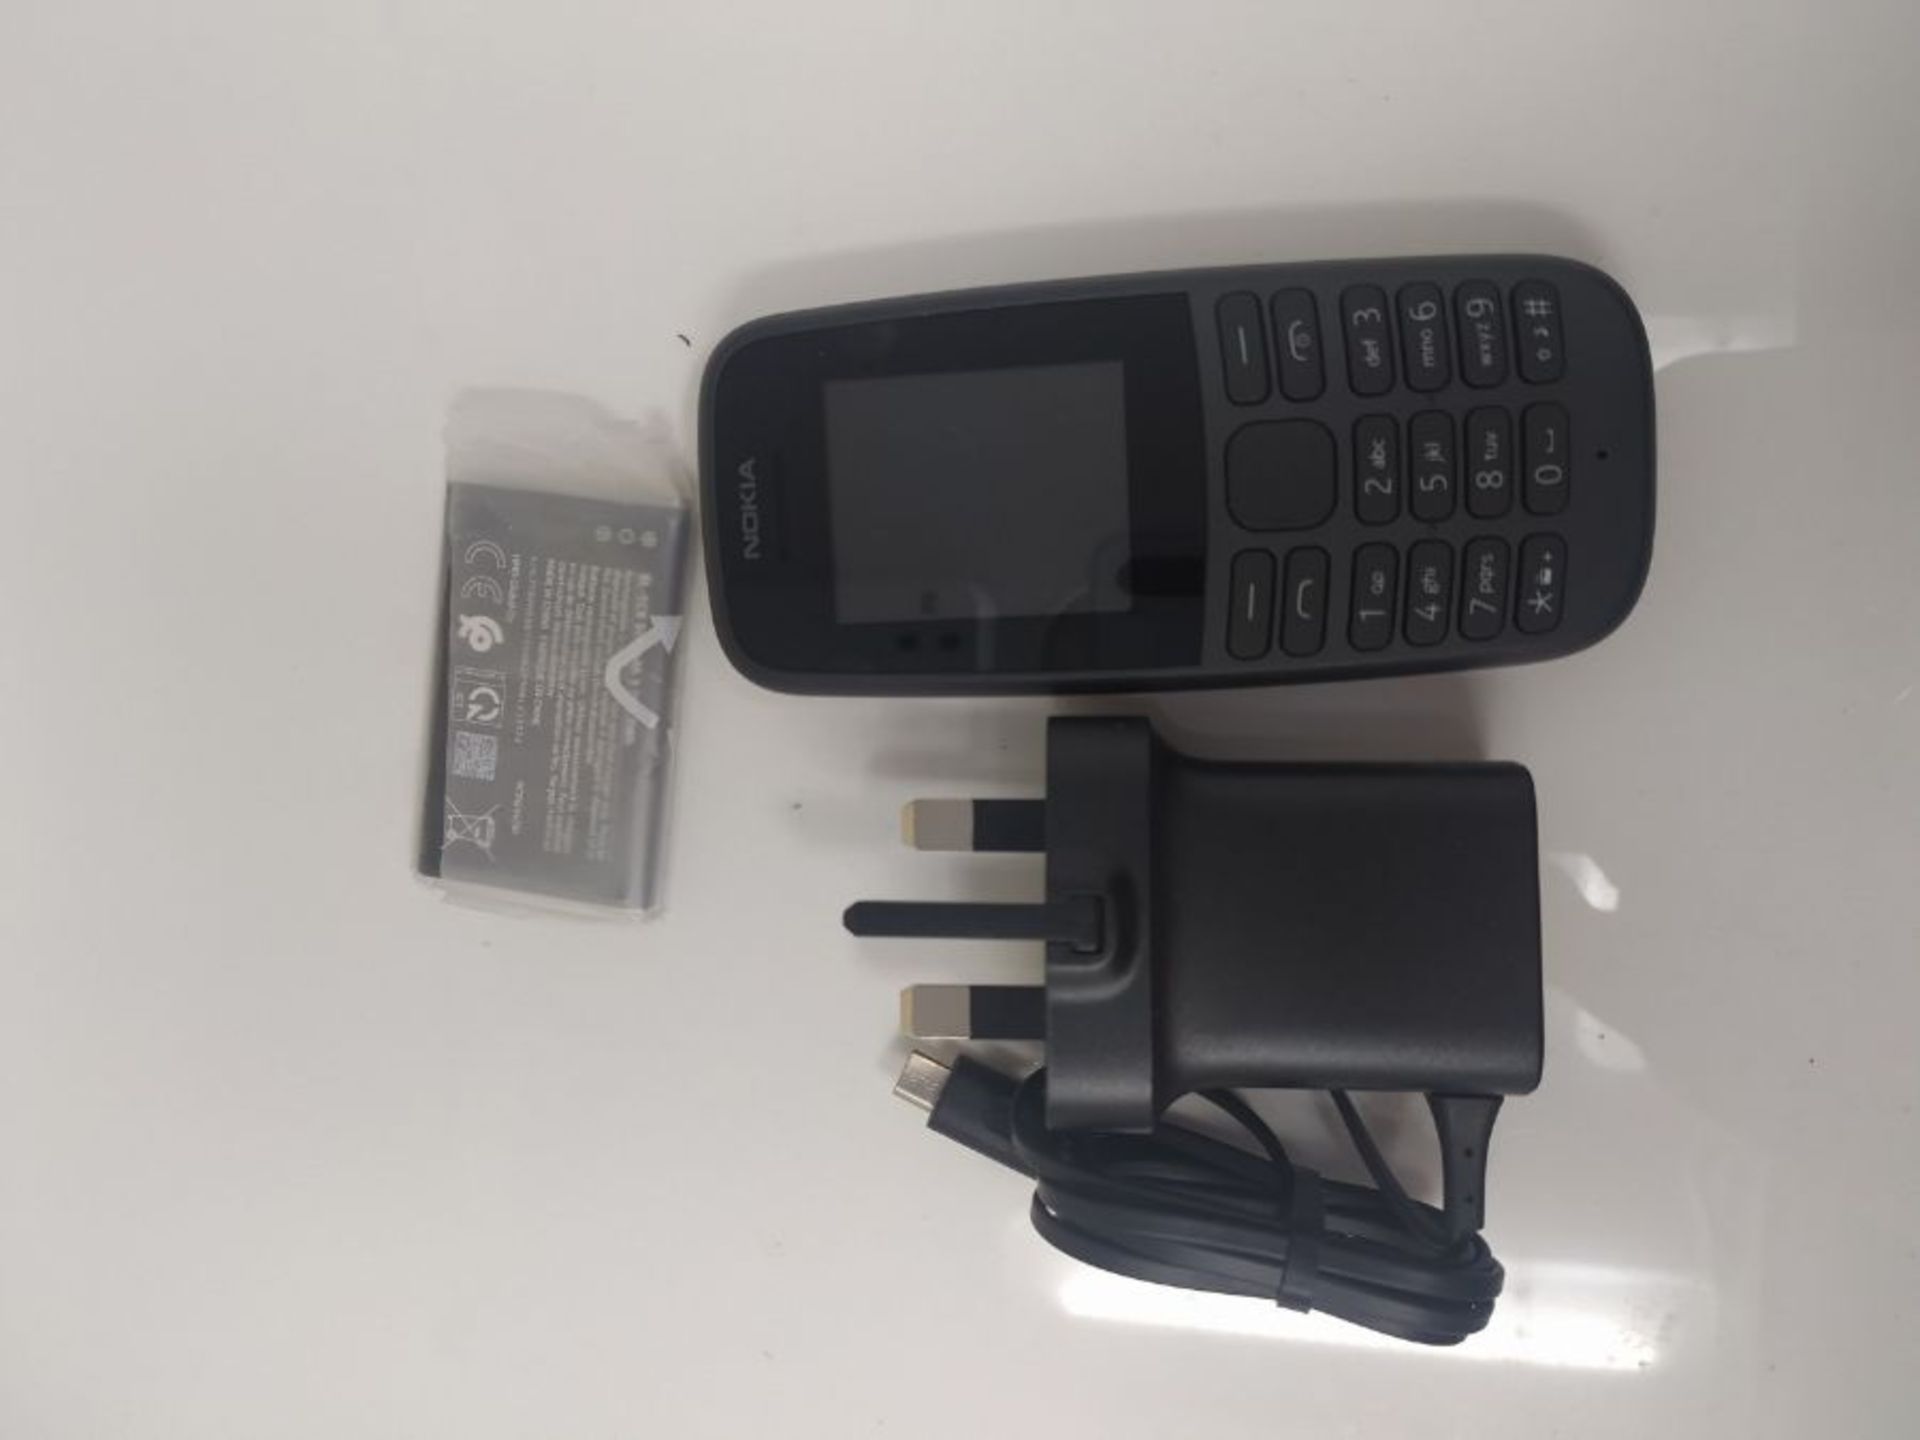 Nokia 105 (2019 edition) 1.77 Inch UK SIM Free Feature Phone (Single SIM)  Black - Image 2 of 2